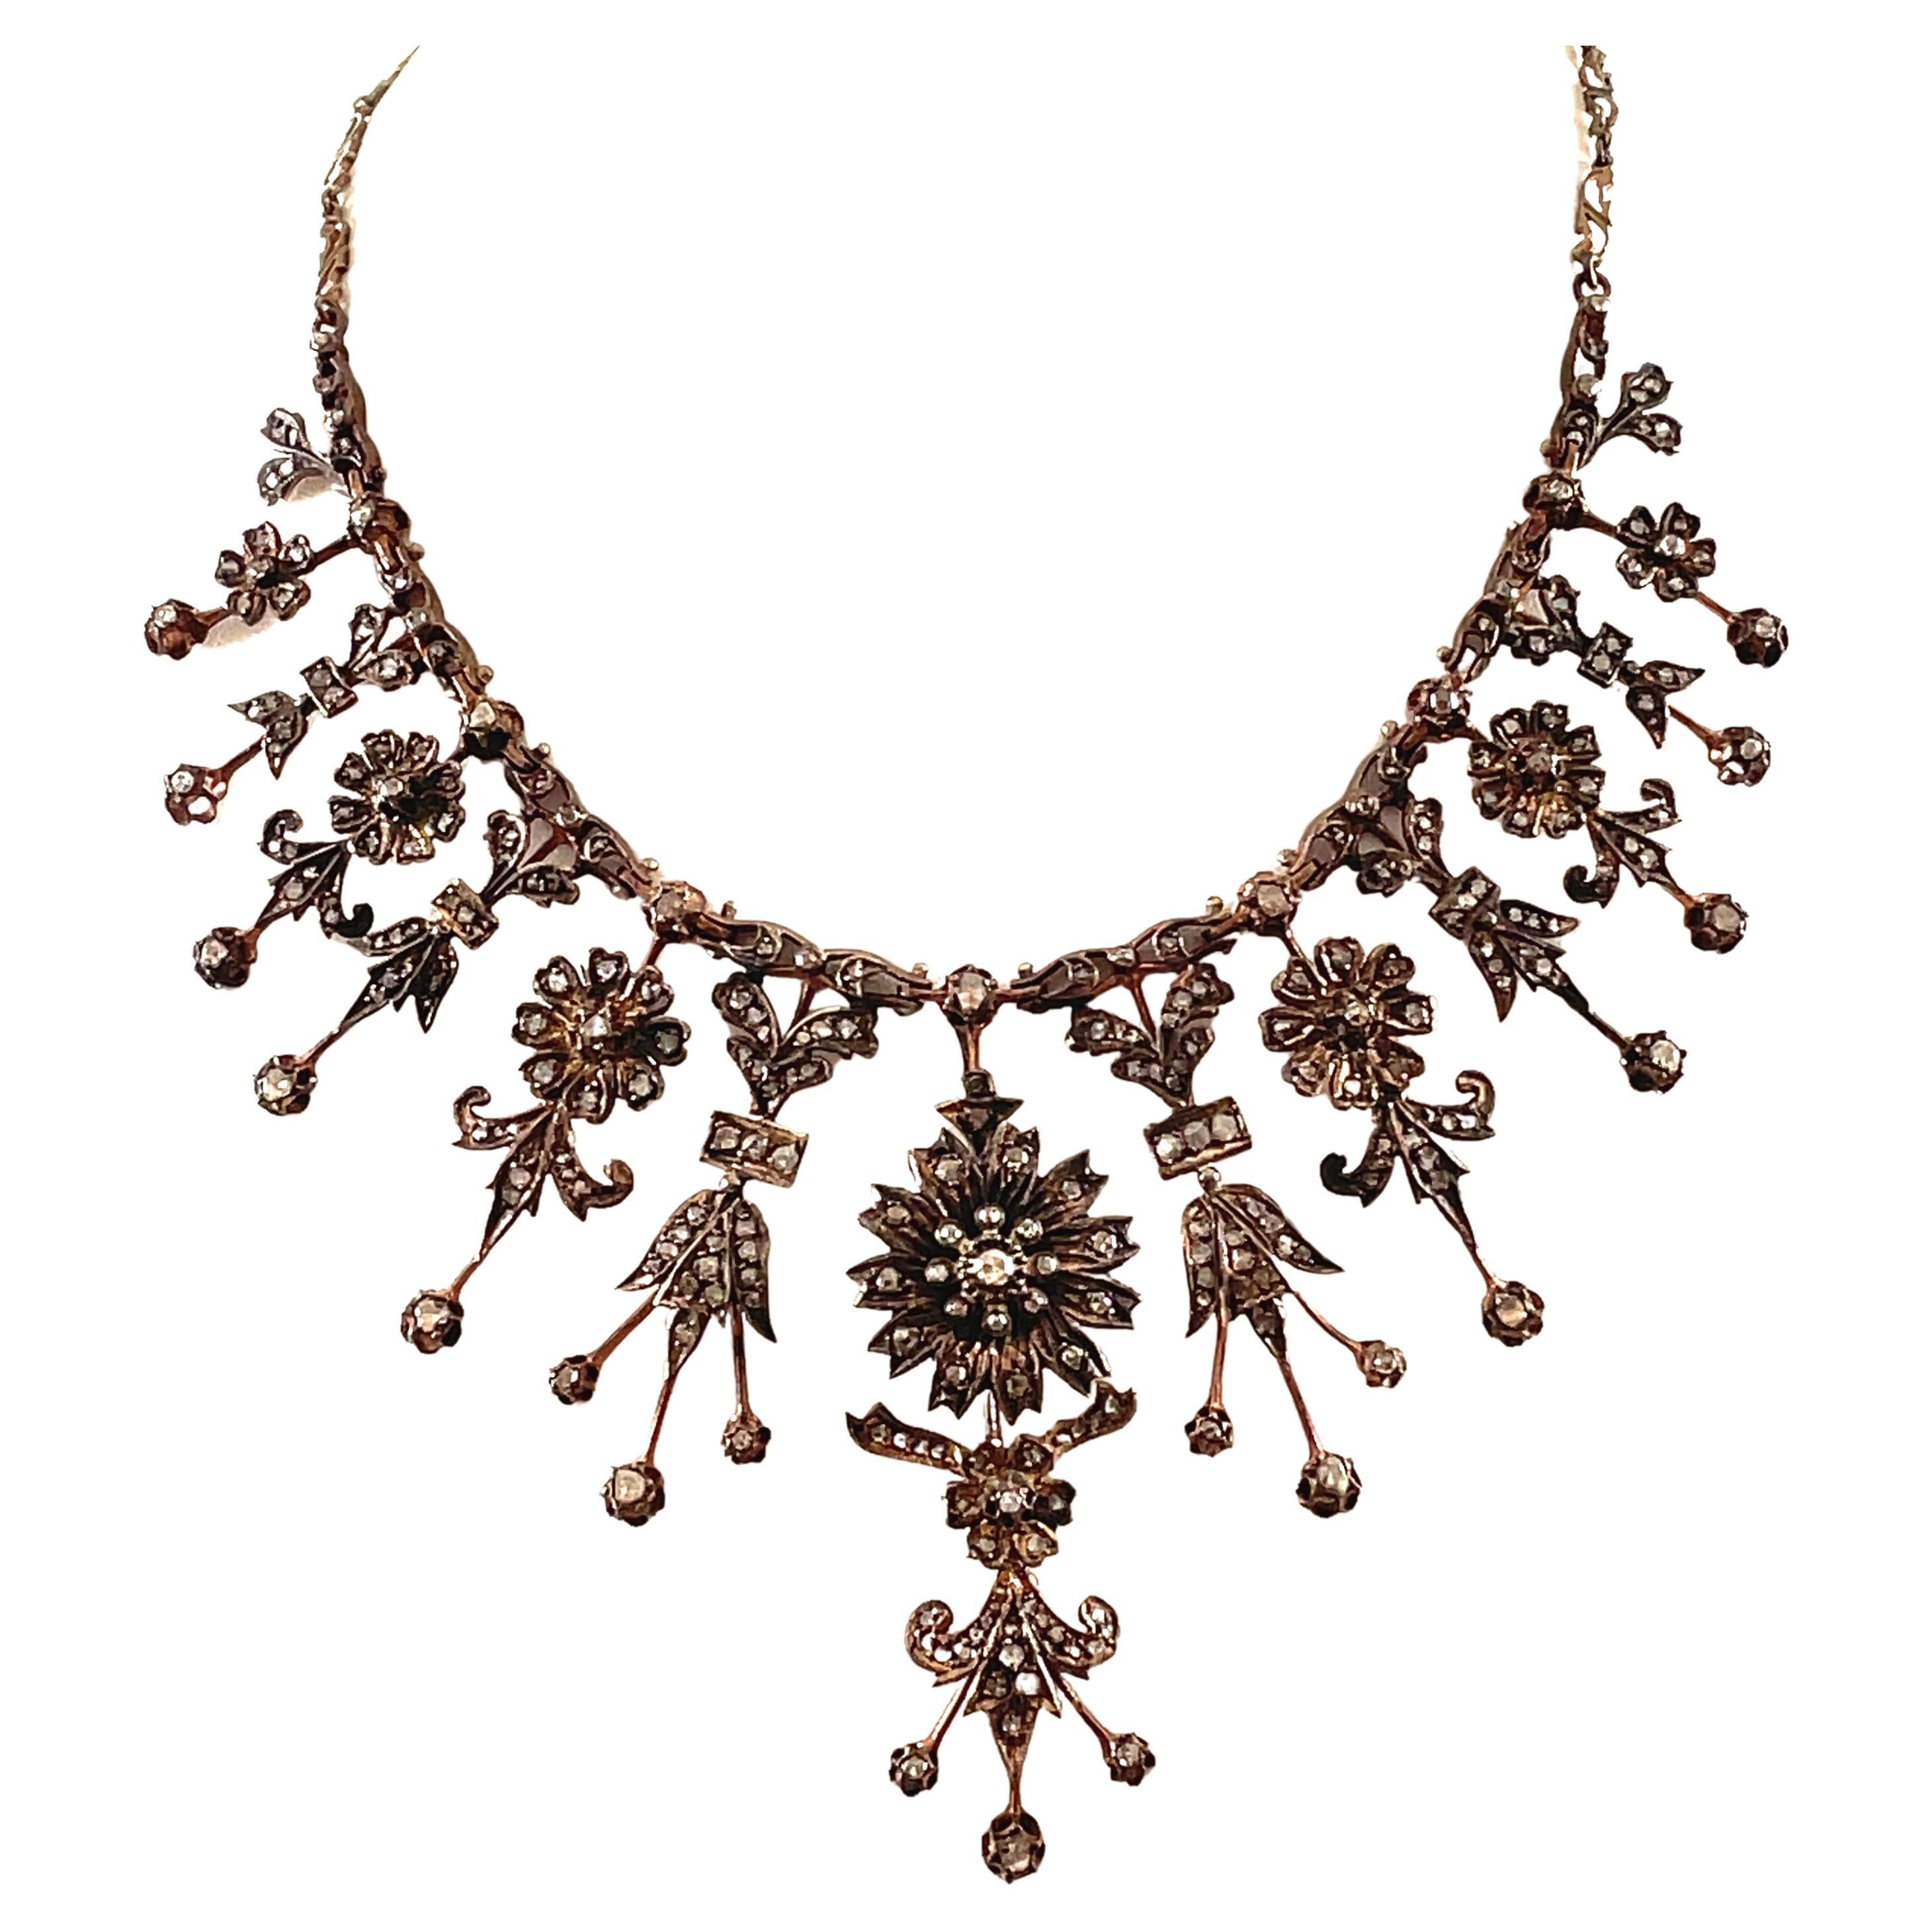 Vintage Victorian Style Apx 11ct Rose Cut Diamond Drop Necklace